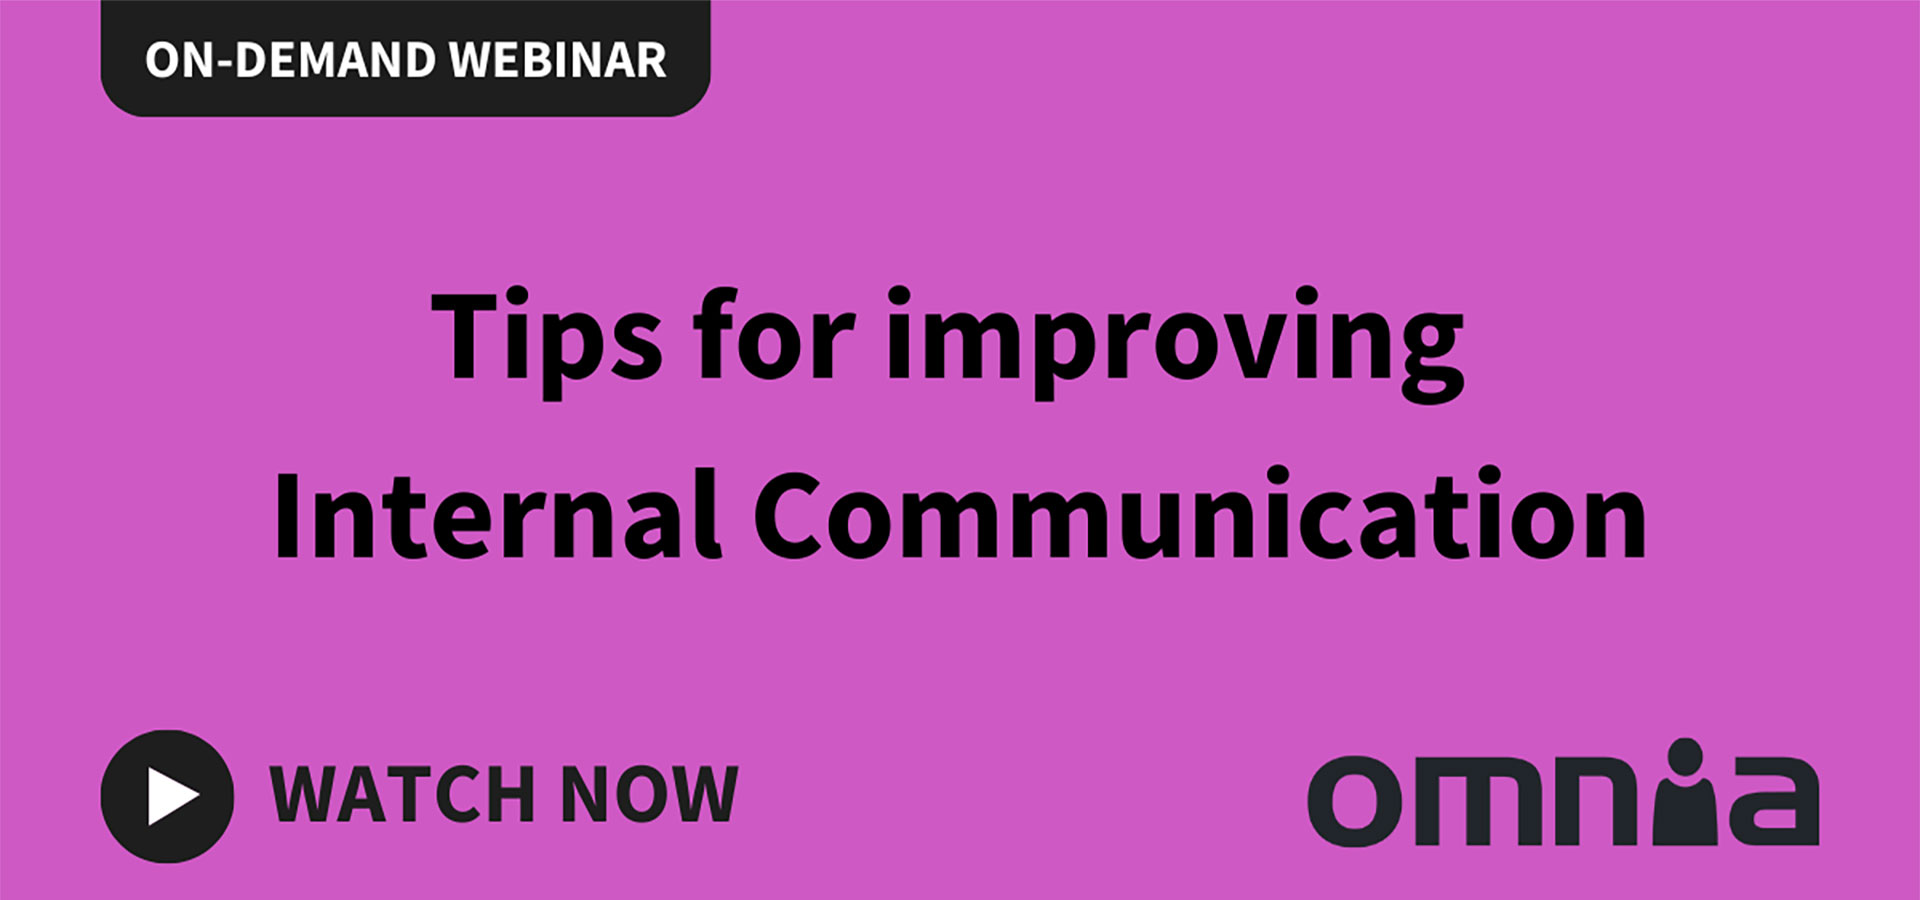 Tips-for-improving-internal-communication